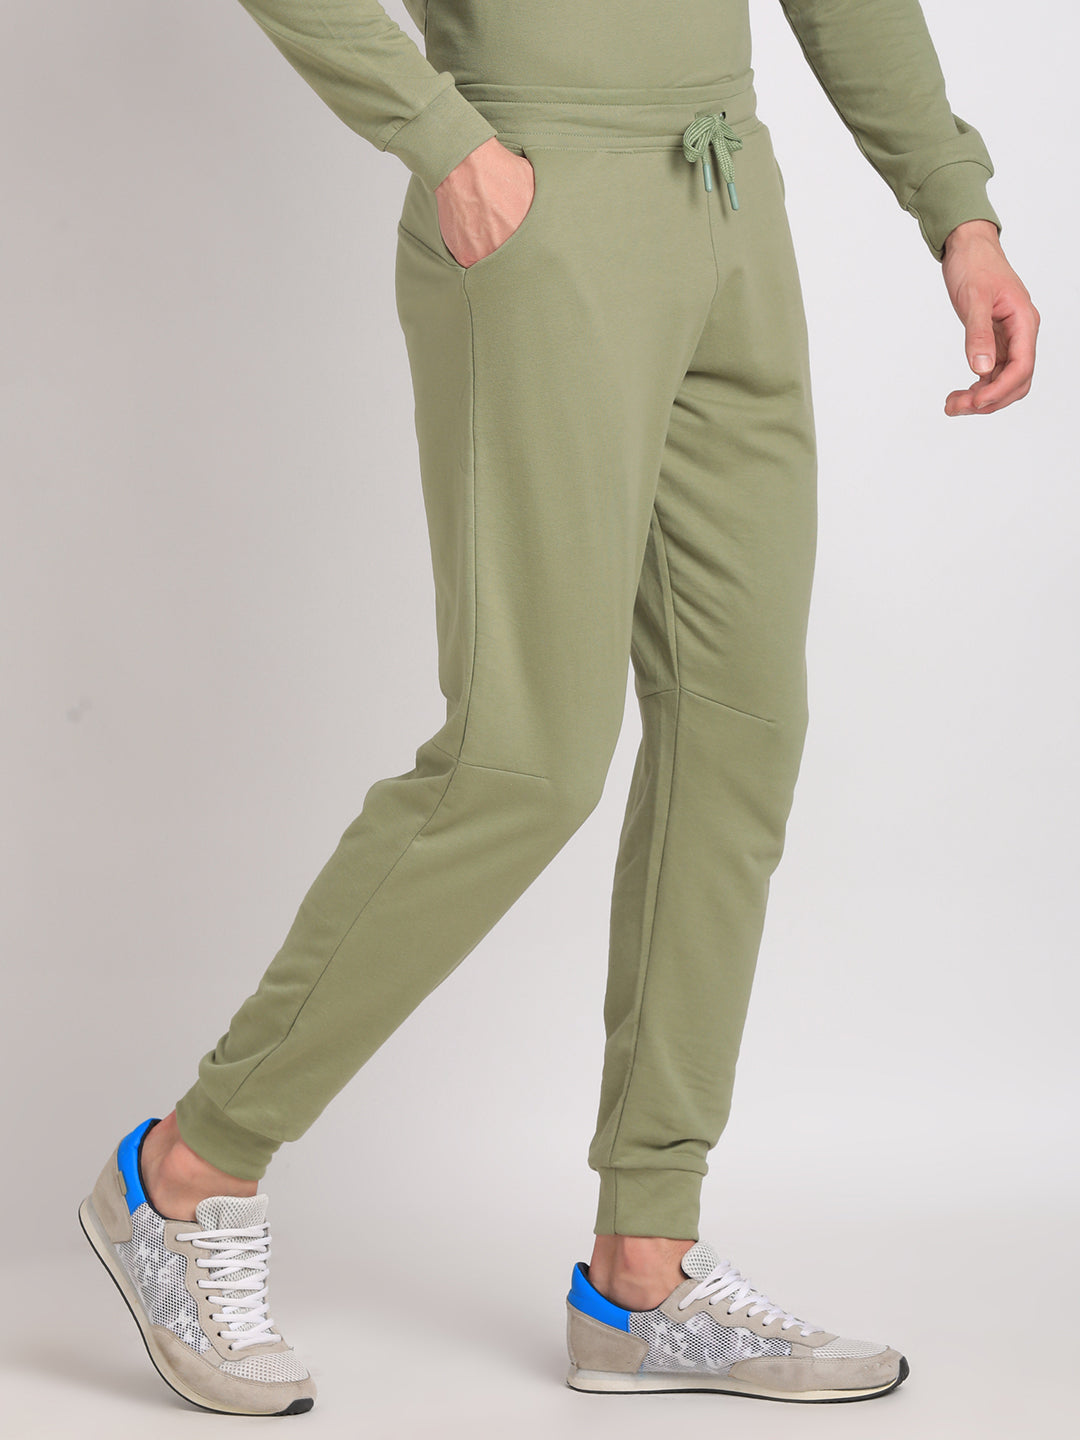 Olive green jogger pants | HOWTOWEAR Fashion | Comfy fall outfits, Fashion,  Fashion outfits